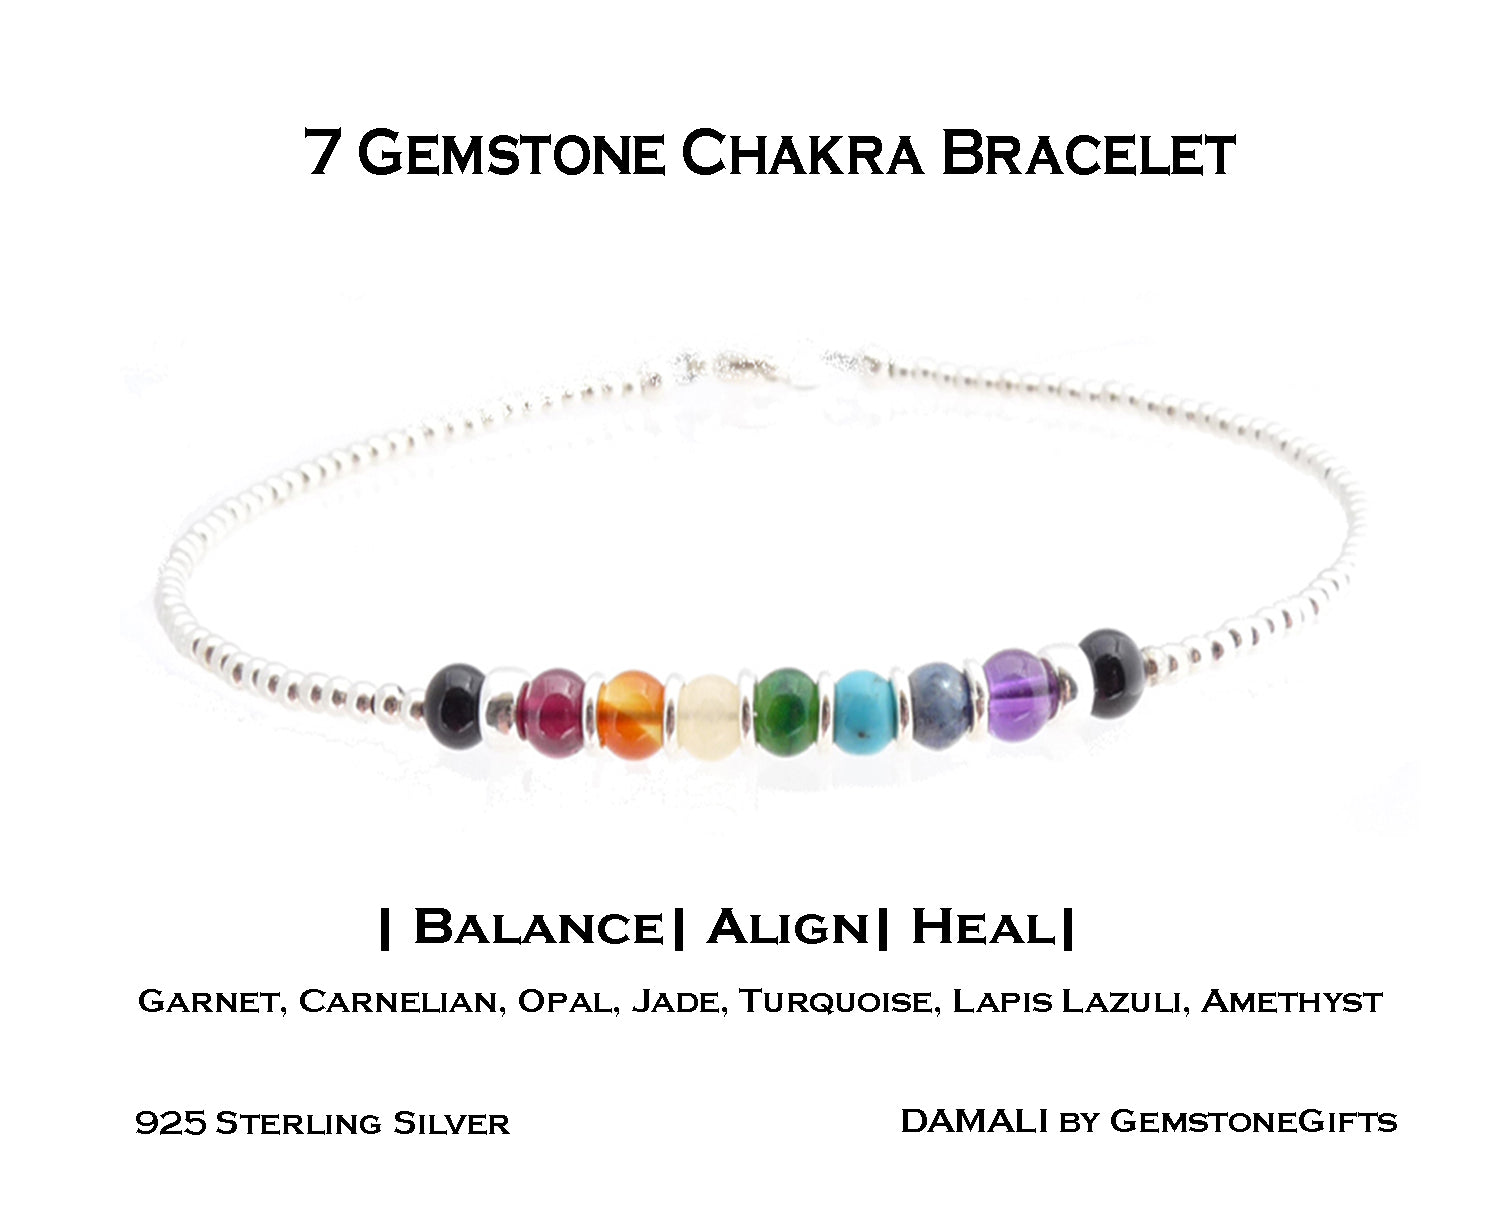 Authentic 7 Chakra Bracelets using Genuine Gemstones in Sterling Silver or 14K Gold Filled. emstones.